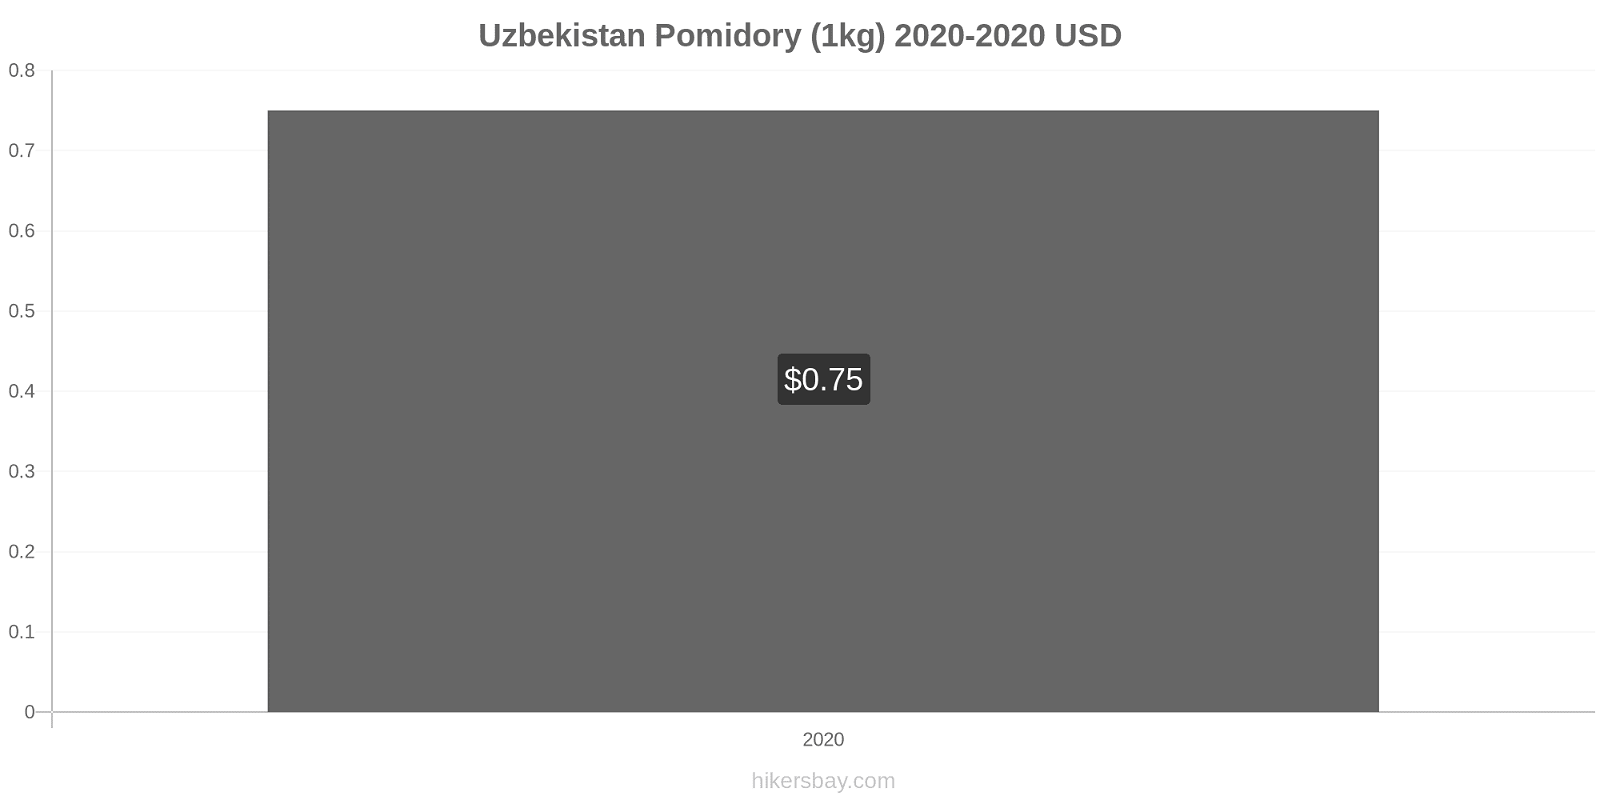 Uzbekistan zmiany cen Pomidory (1kg) hikersbay.com